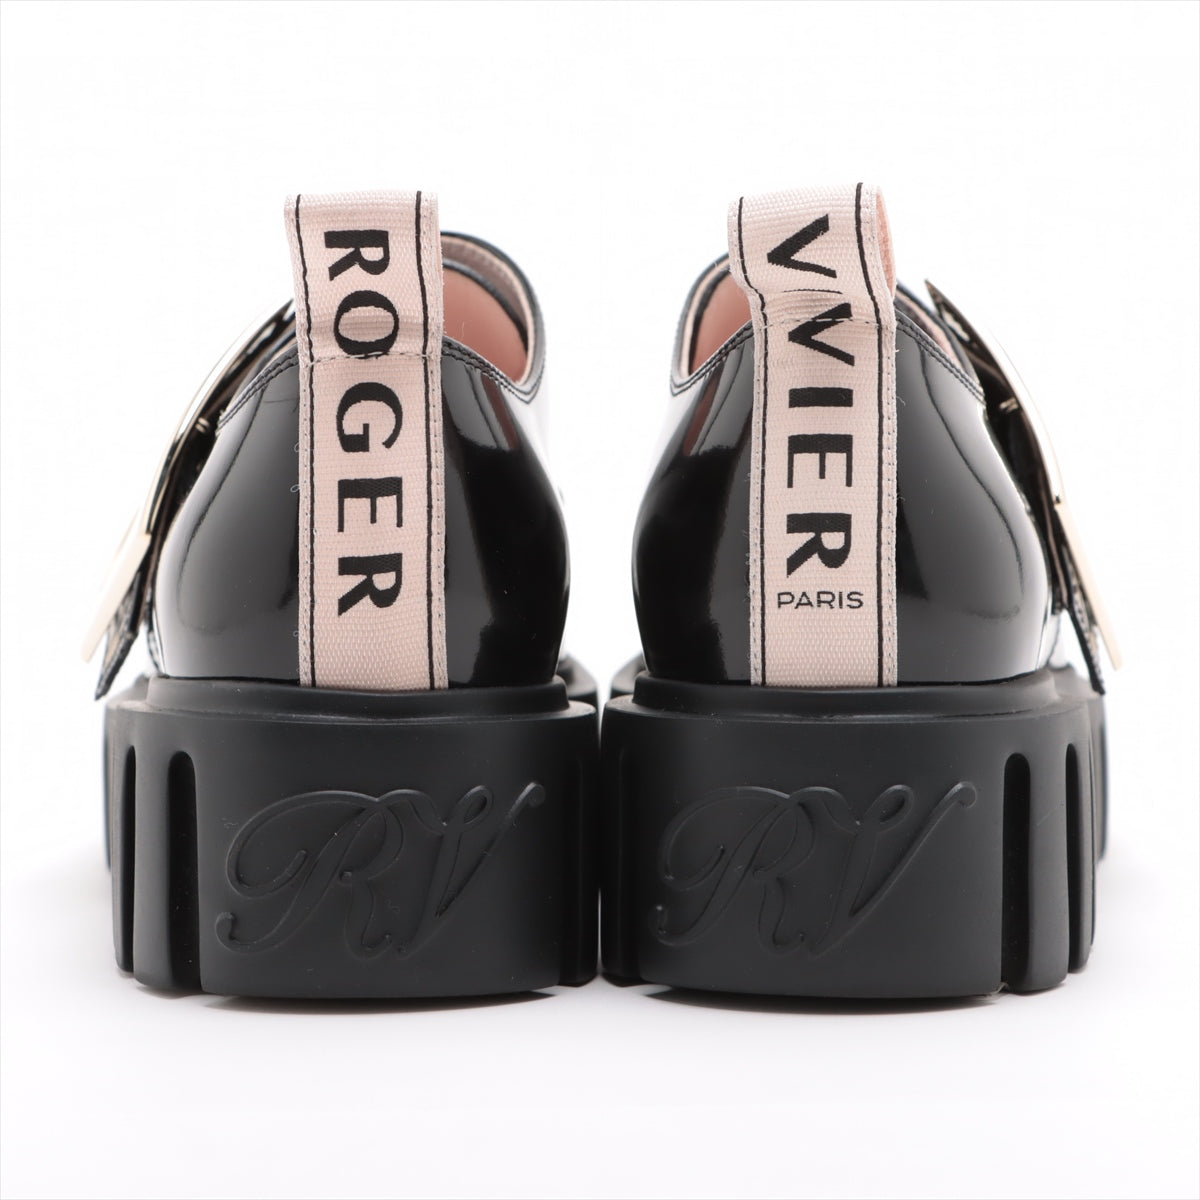 Roger Vivier Leather Leather shoes 36 Ladies' Black Buckle